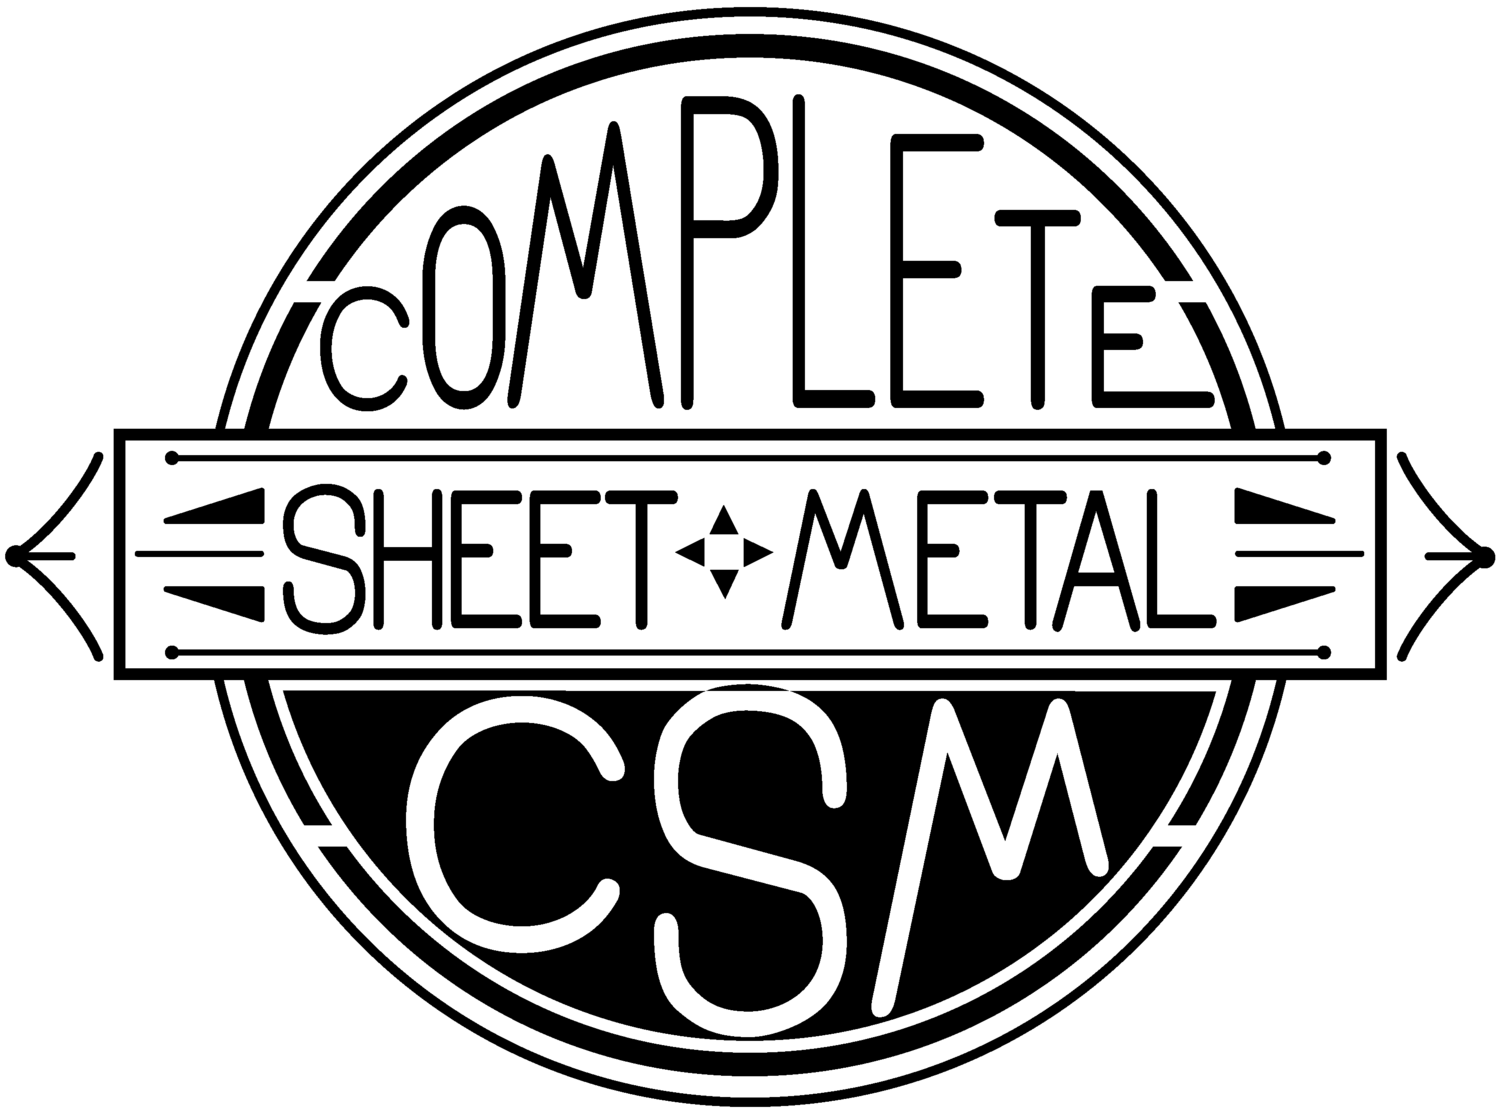 Complete Sheet Metal